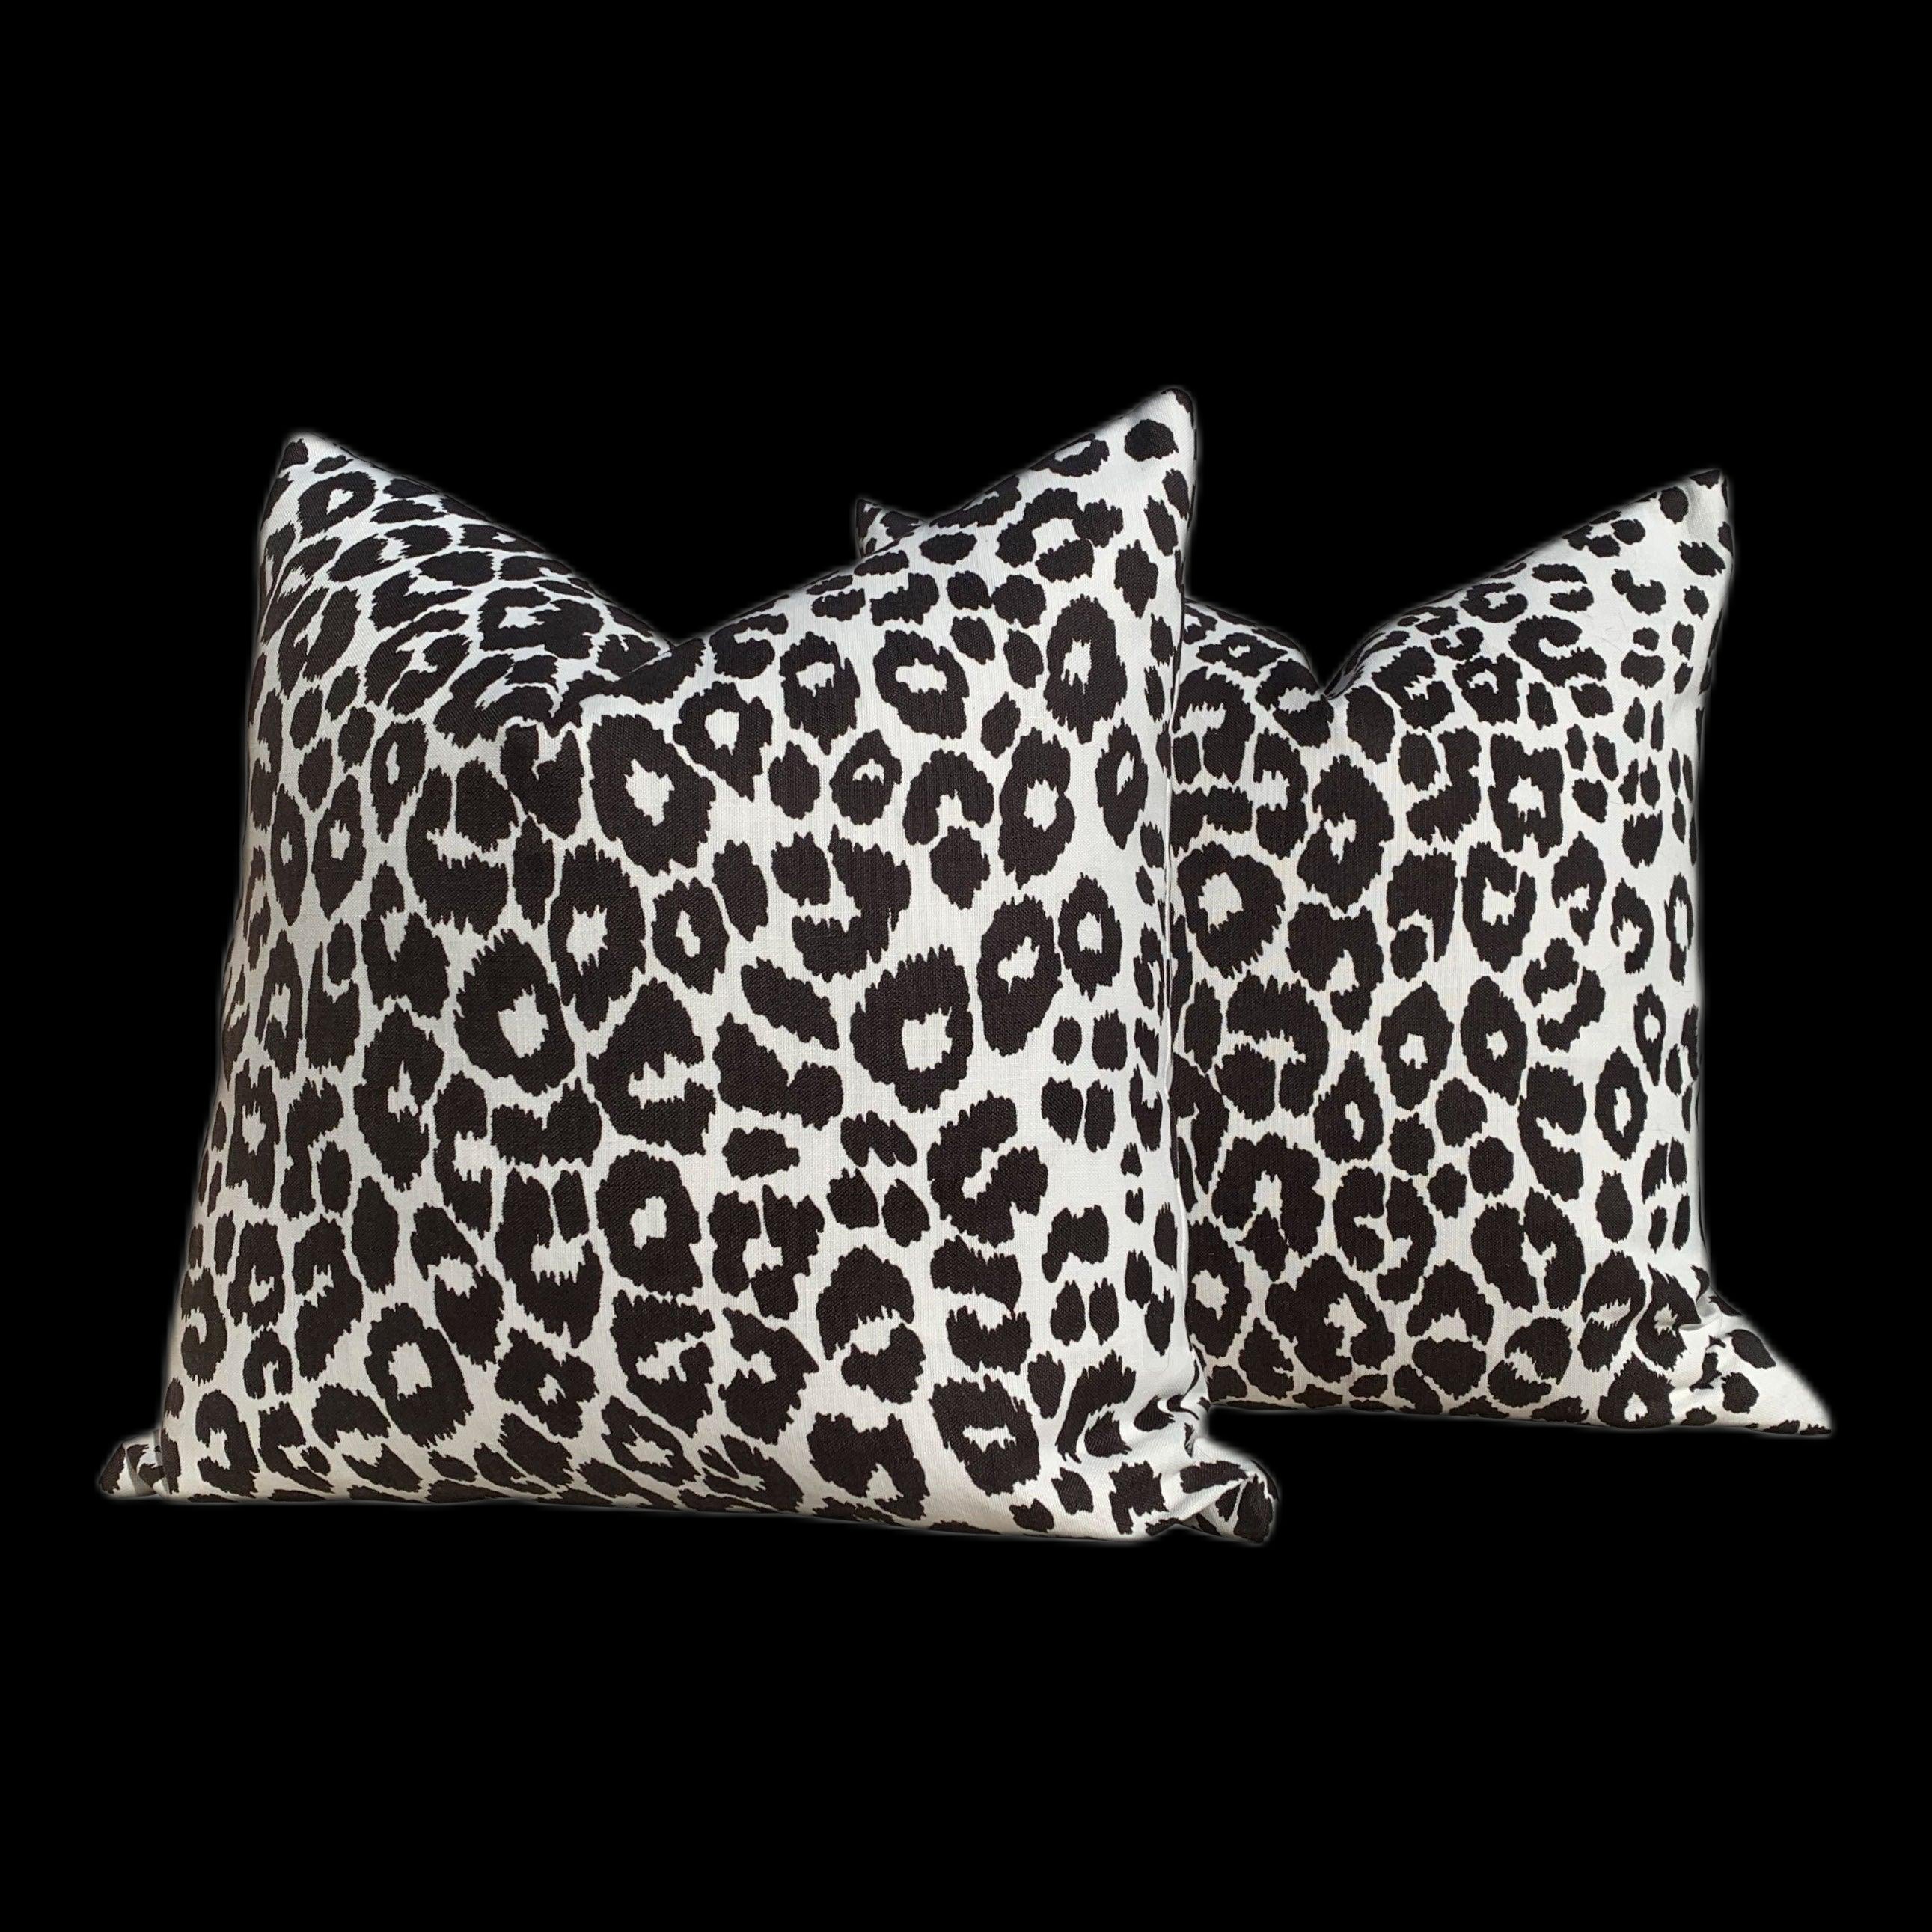 Schumacher Iconic Leopard Pillow in Charcoal. Indoor/Outdoor Pillow.